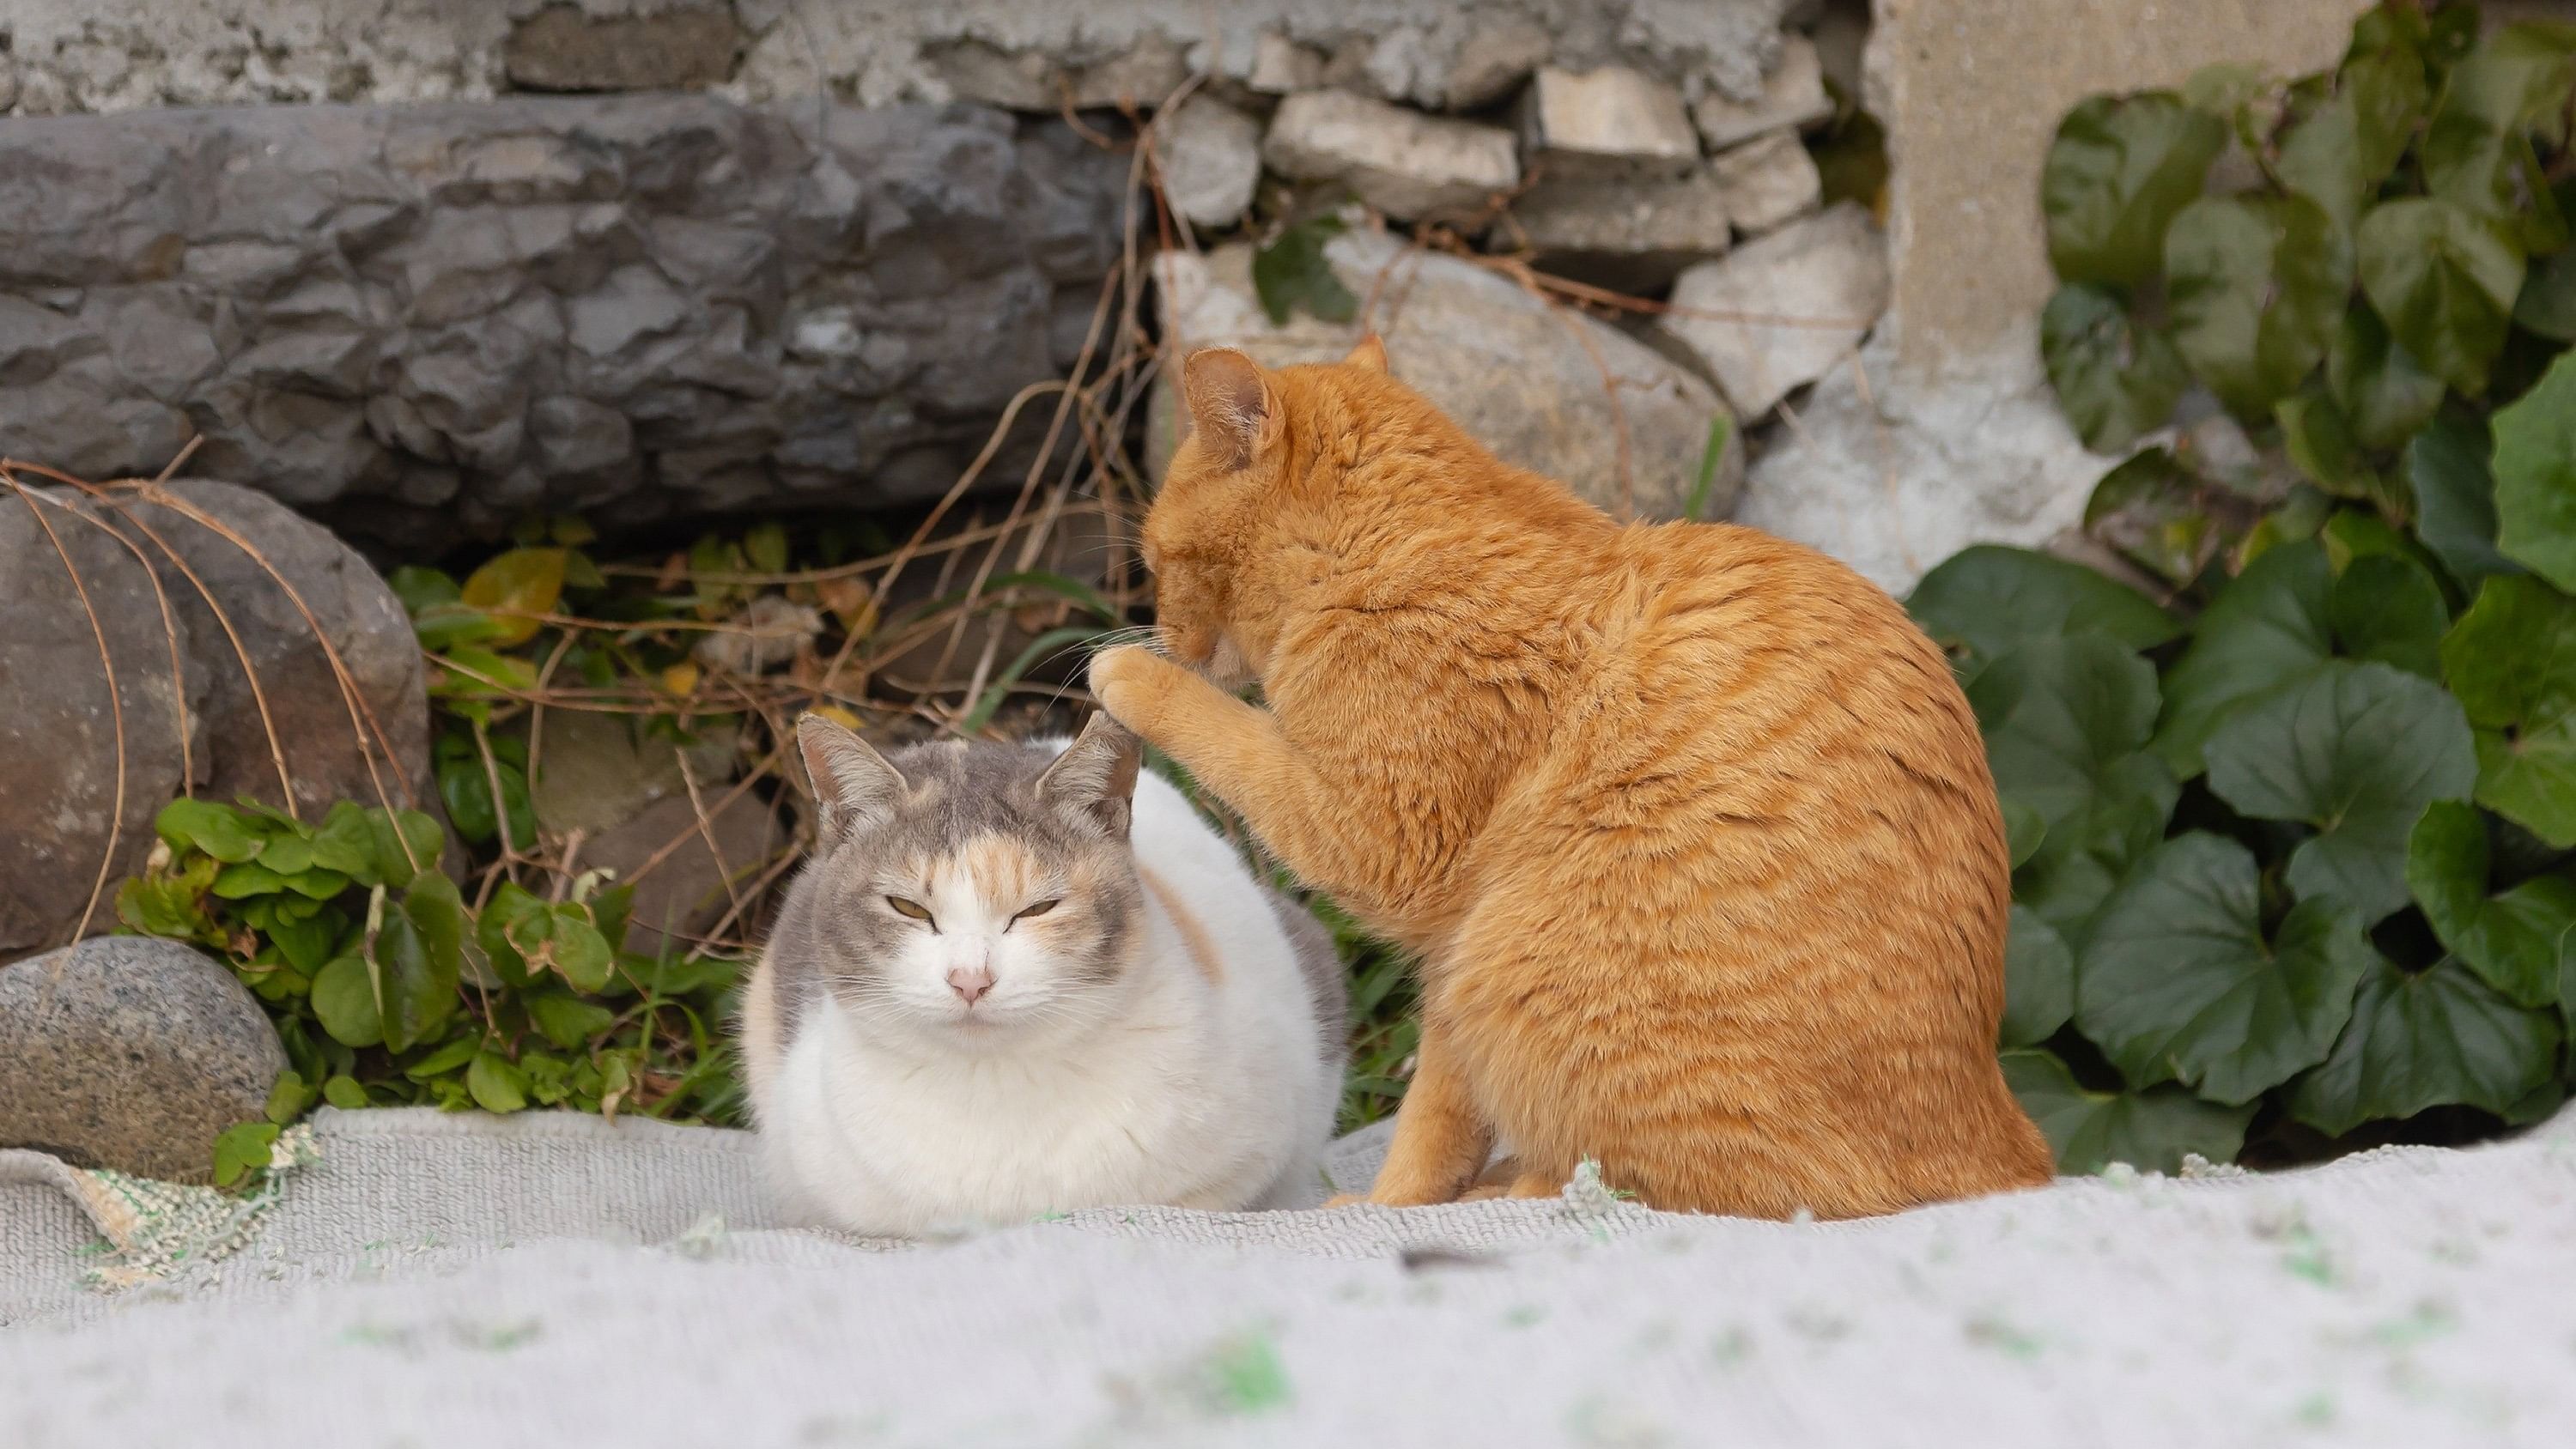 "These cats secretly discuss where on the island we fish," Kenichi Morinaga captioned the photo.